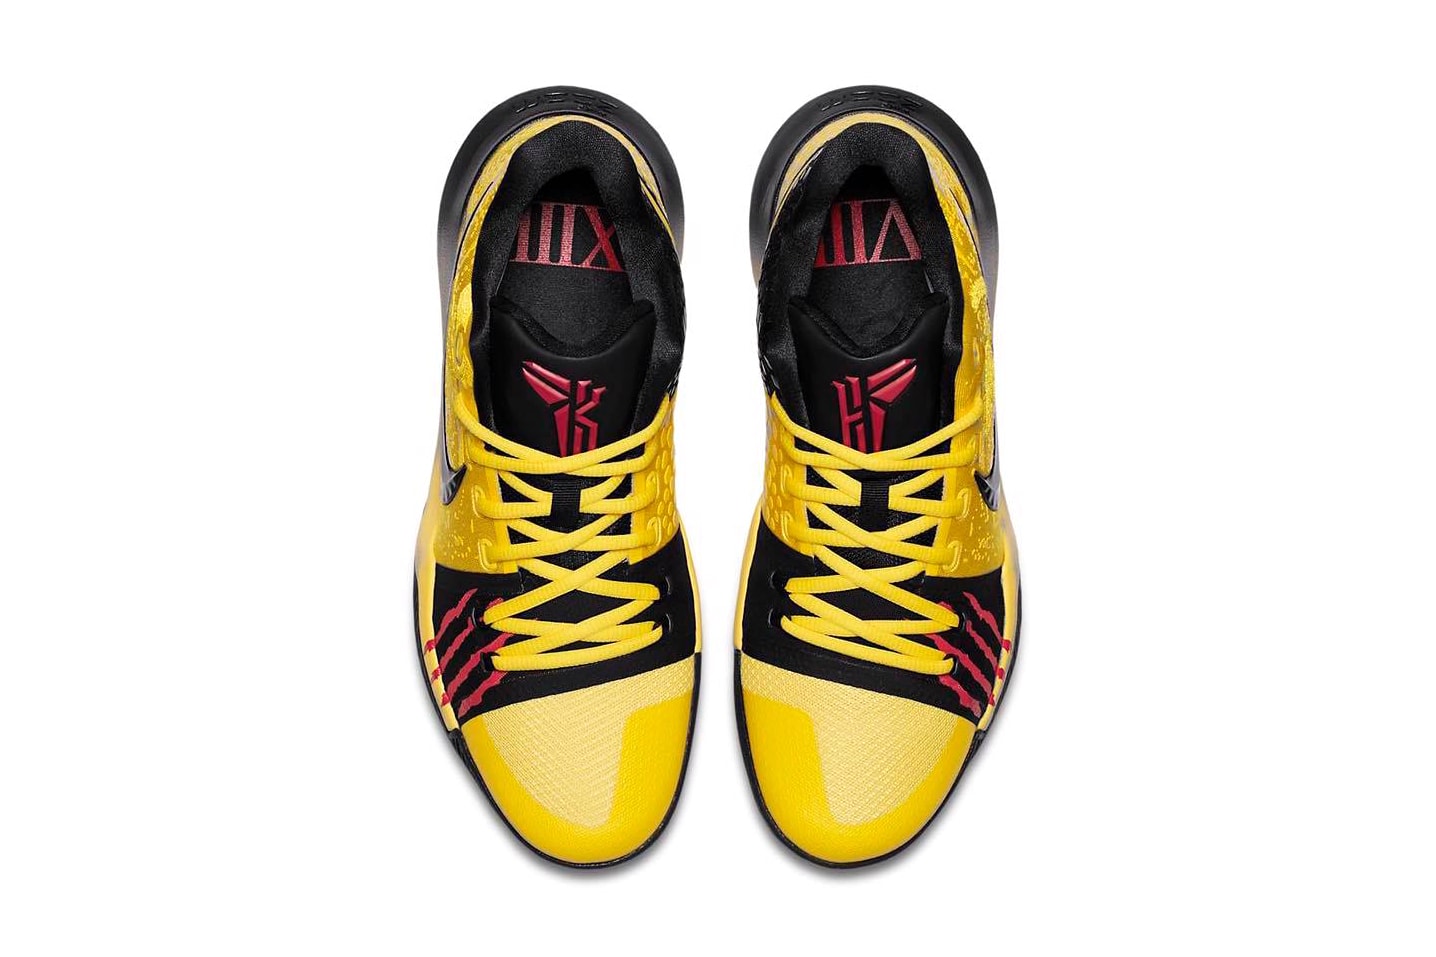 Nike Kyrie 3 Bruce Lee Kobe Bryant Black Mamba Sneakers Shoes Footwear 2017 September 15 Release Date Info Red Yellow Black